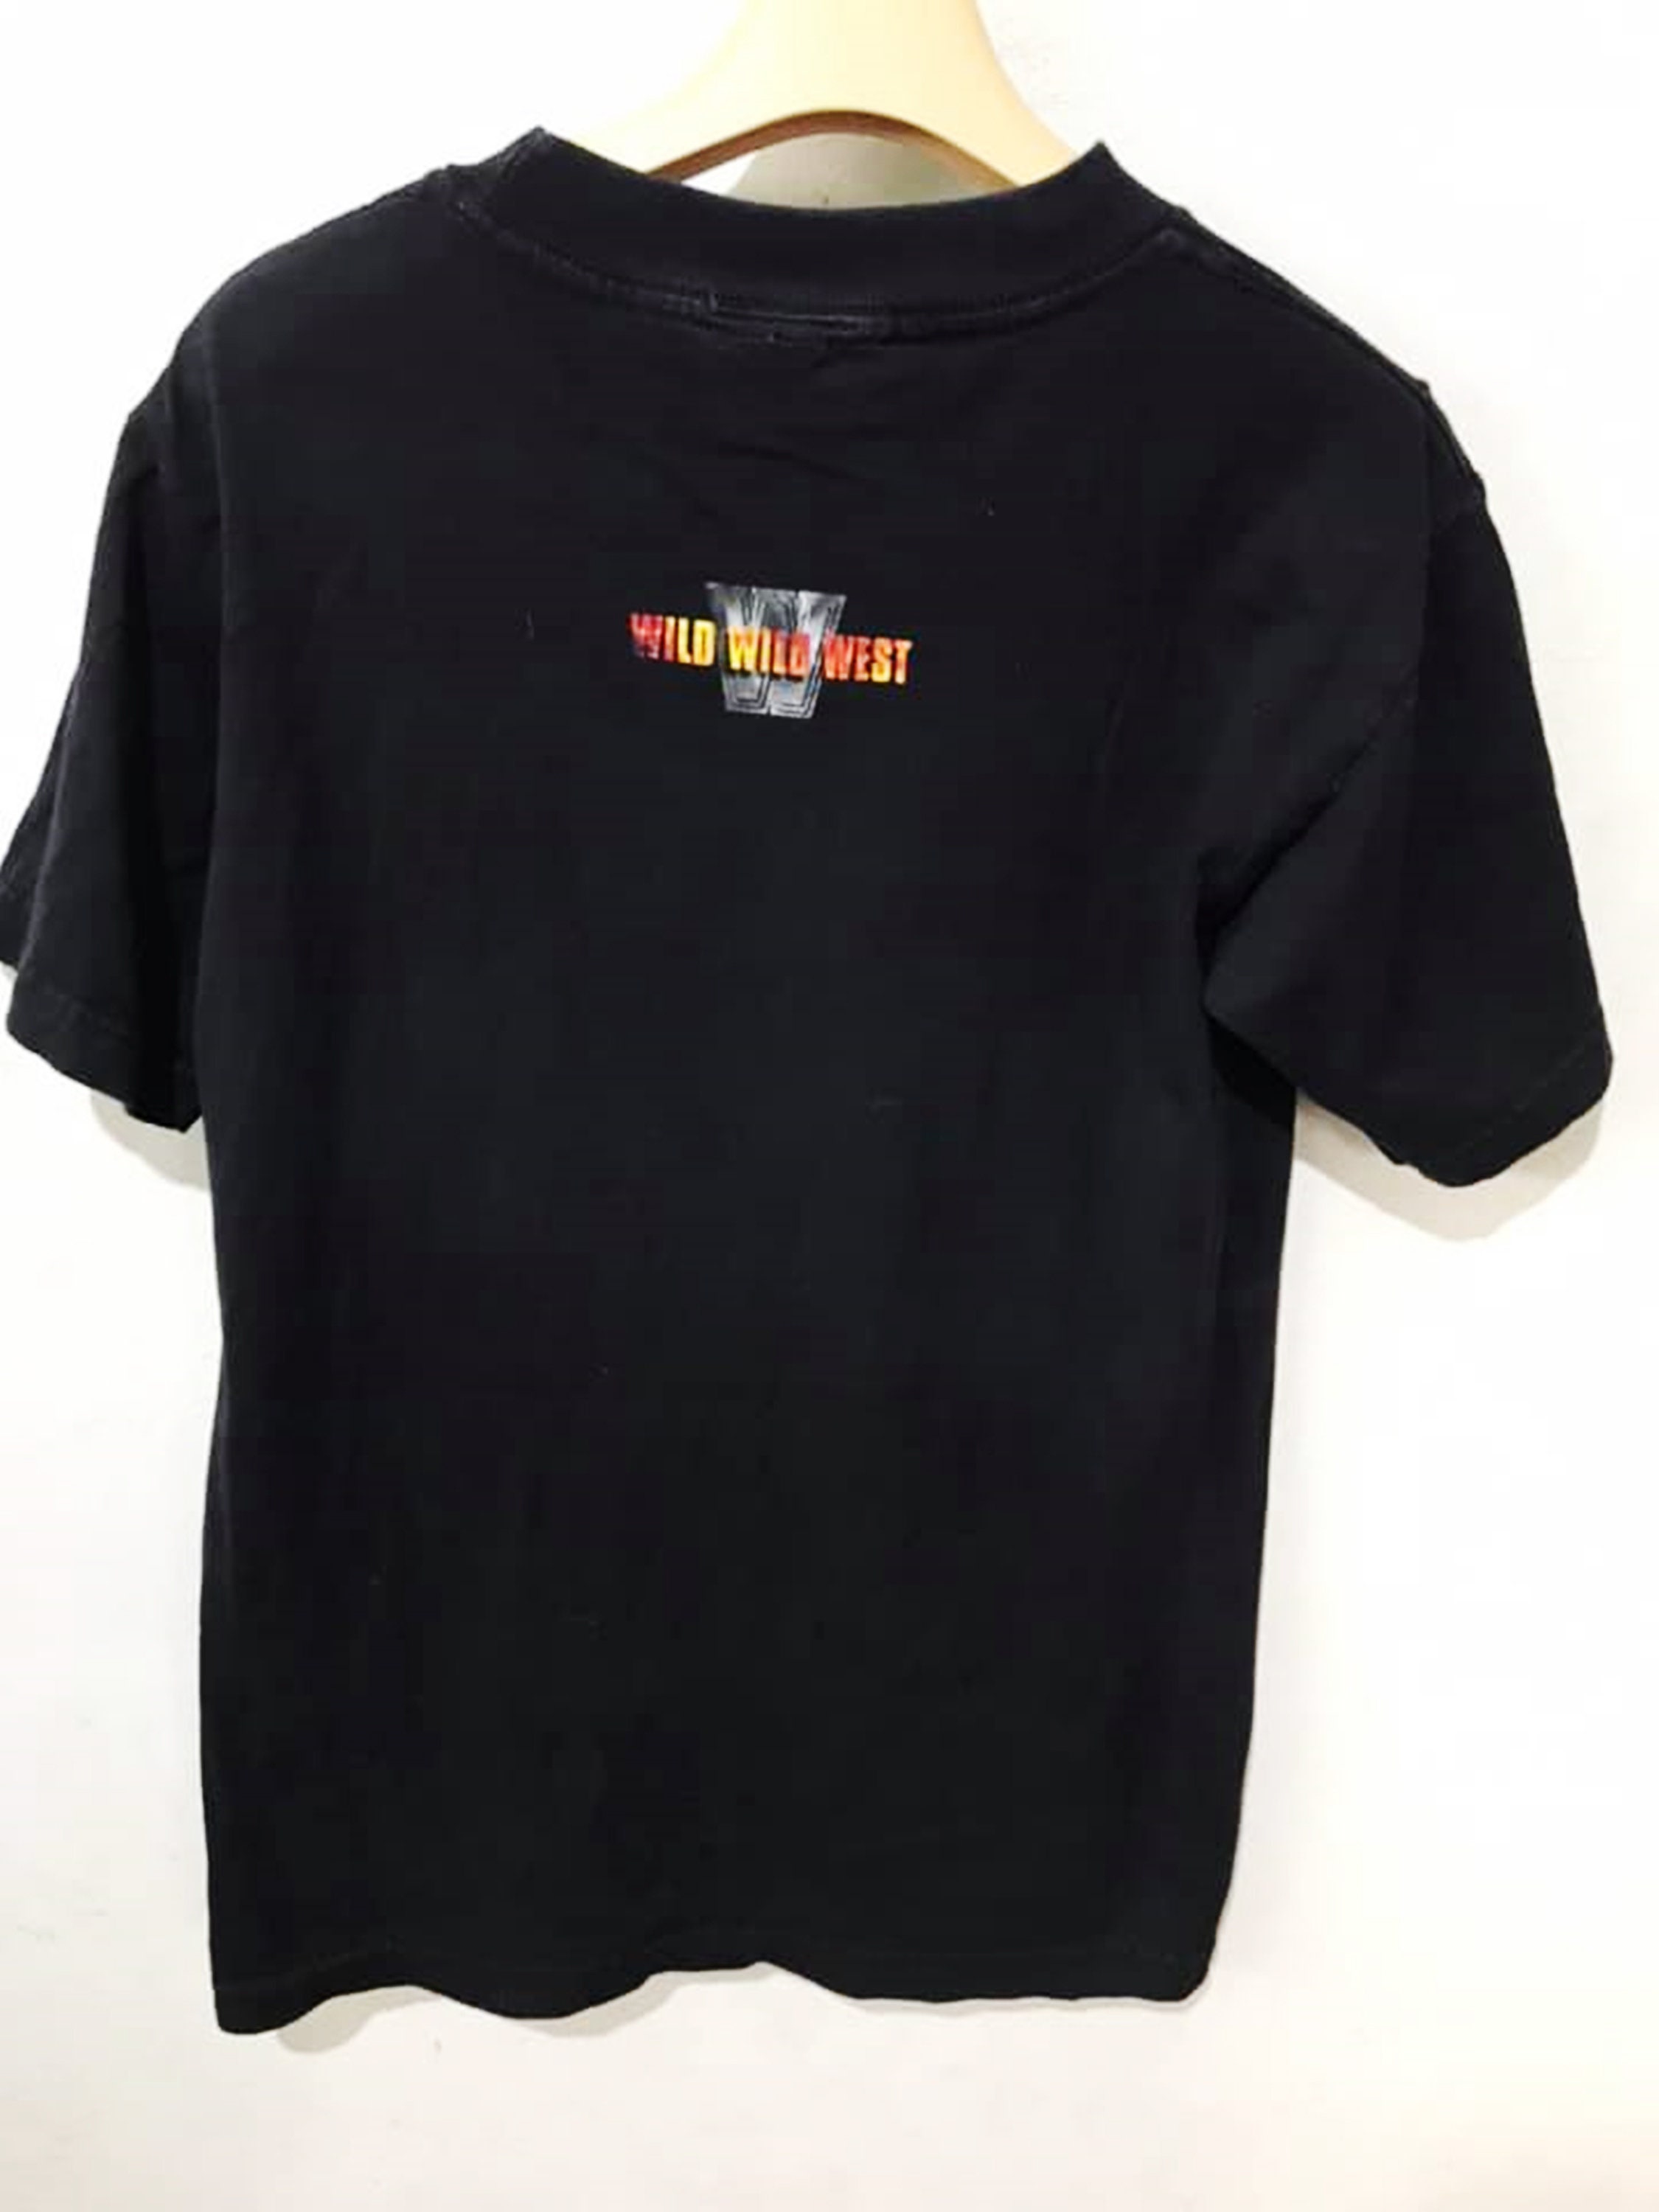 Vintage 90s Wild Wild West Movie Promo Shirt Size S - Etsy